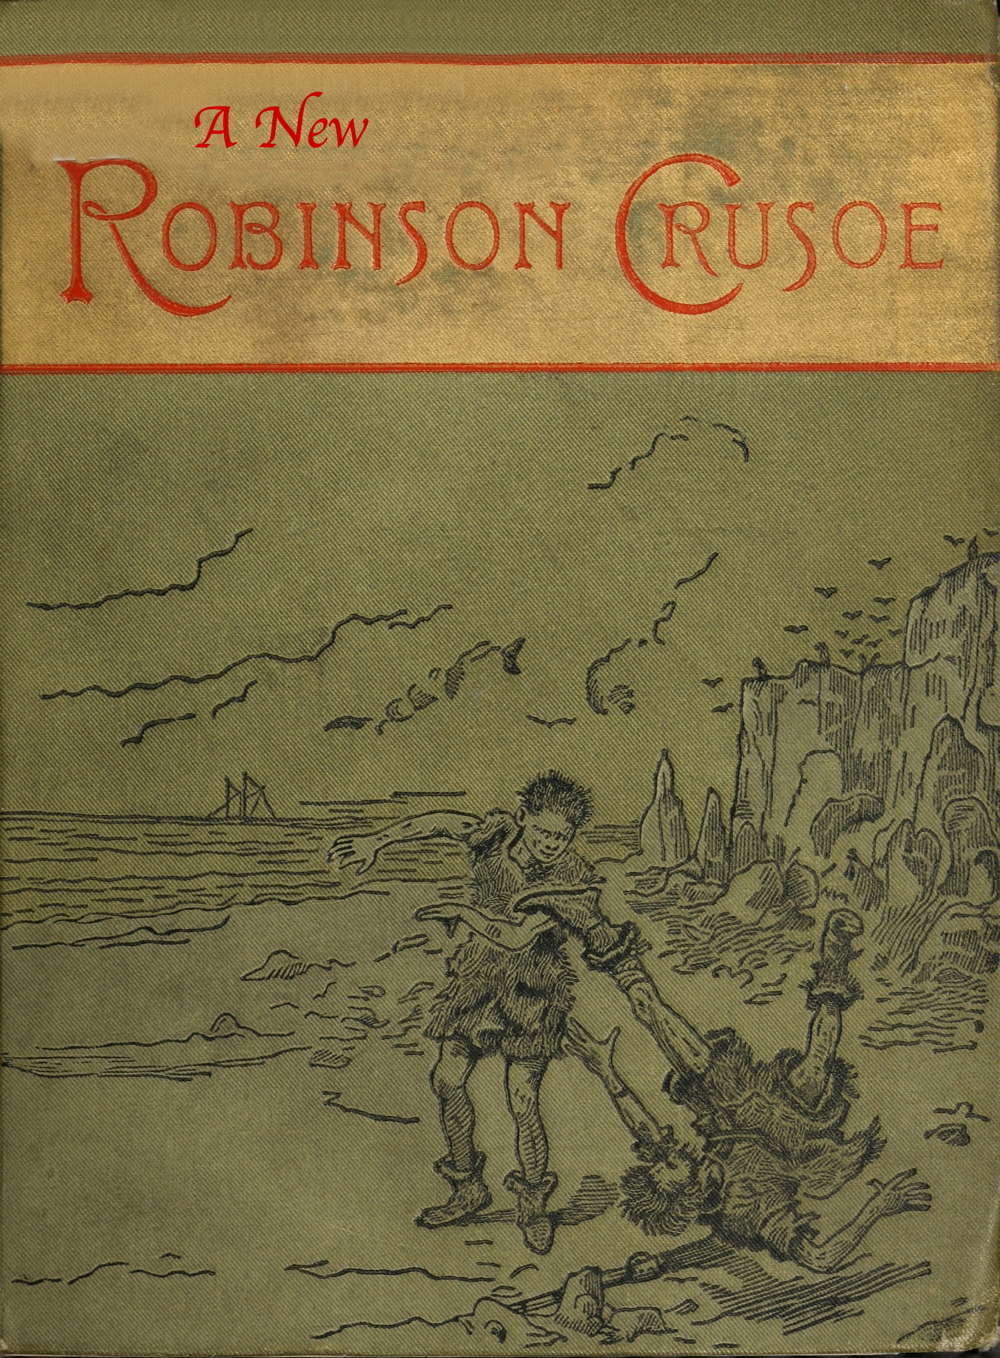 A new Robinson Crusoe